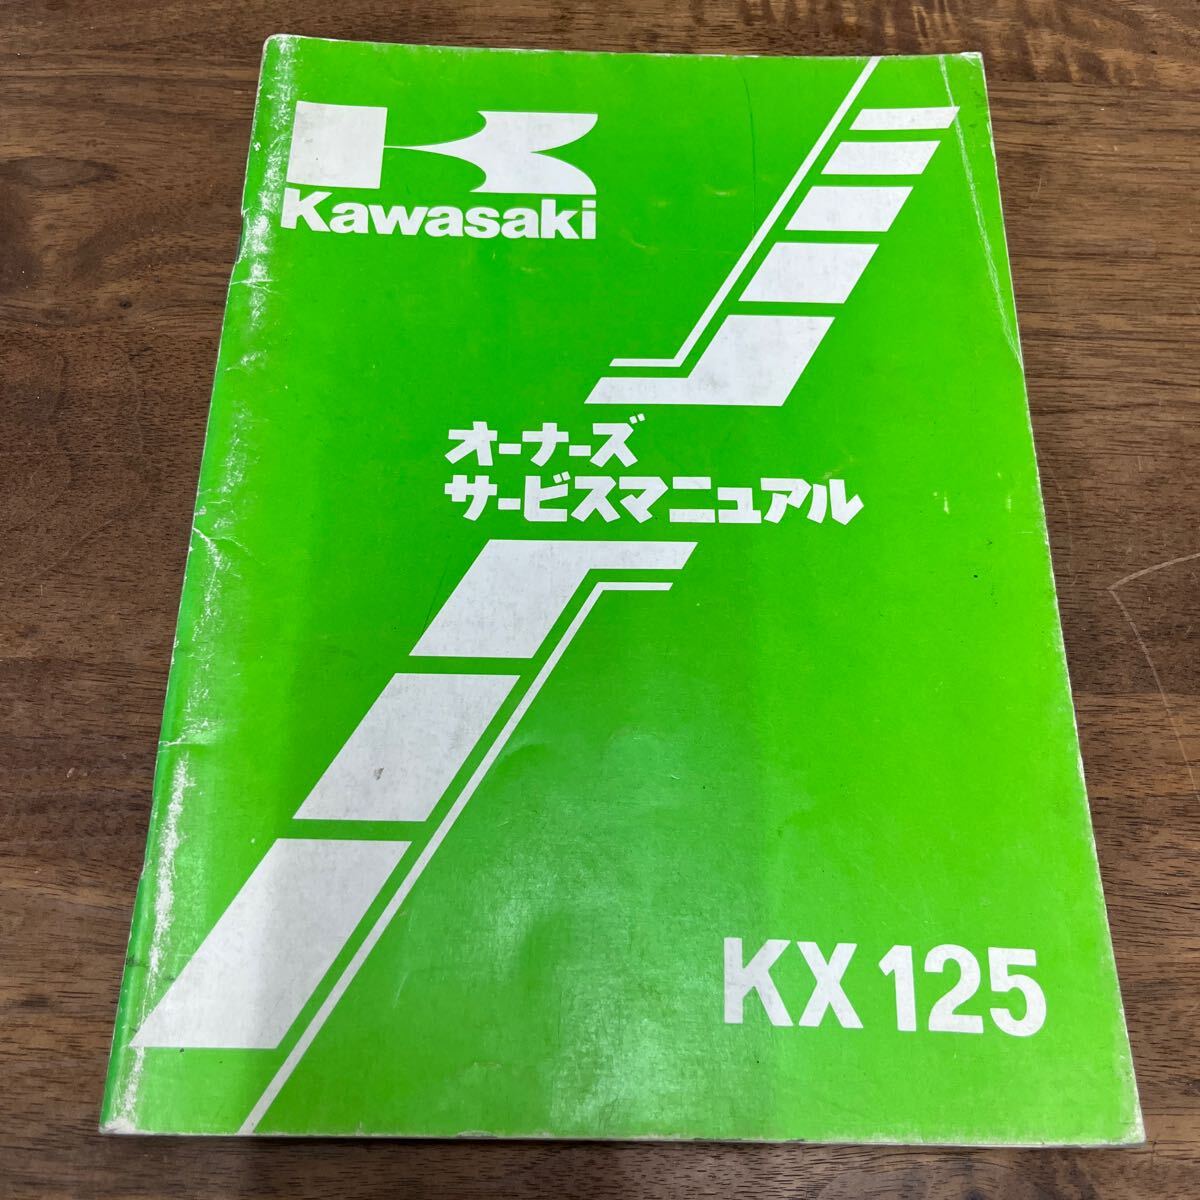 MB-3196★クリックポスト(全国一律送料185円) Kawasaki カワサキ オーナーズサービスマニュアル KX125 1984.8 初版 KX125-D1 N-5/①_画像1